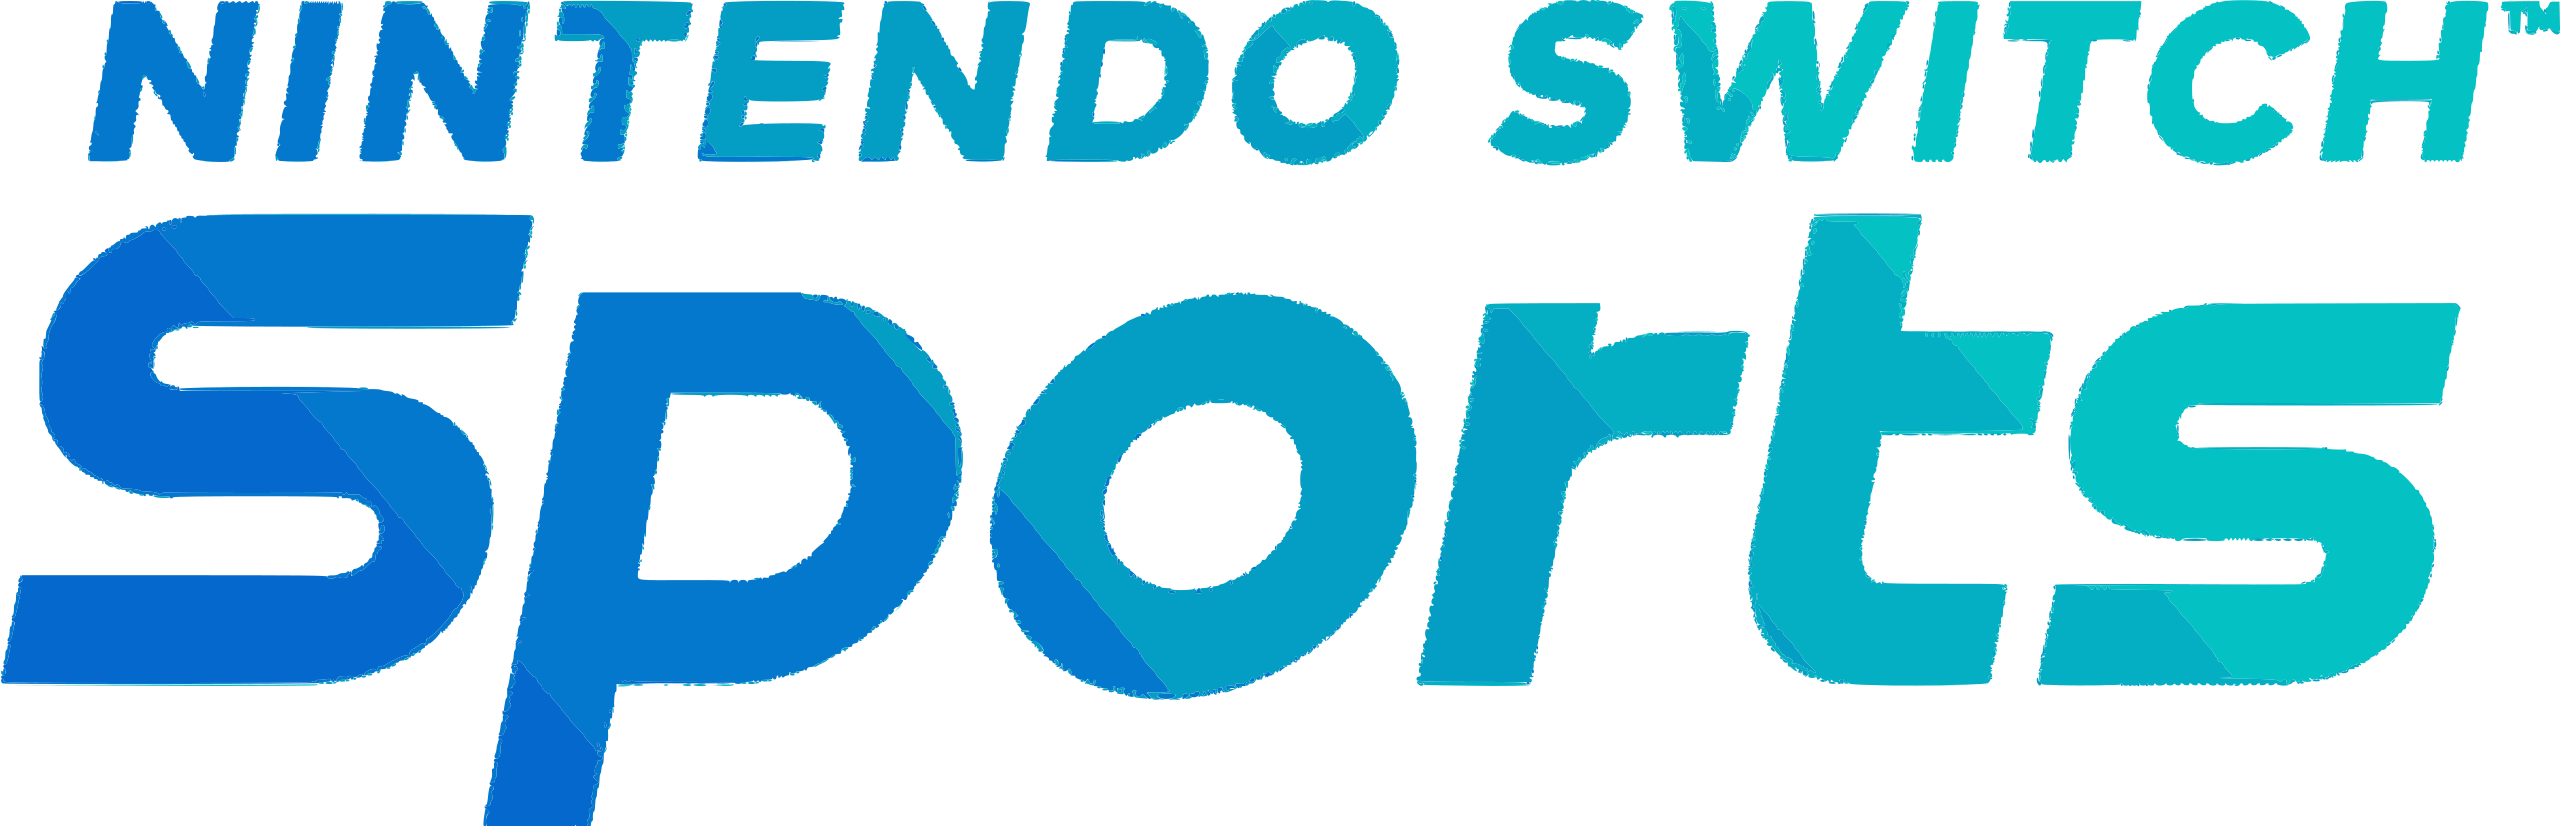 File:Nintendo Switch Logo.svg - Wikimedia Commons